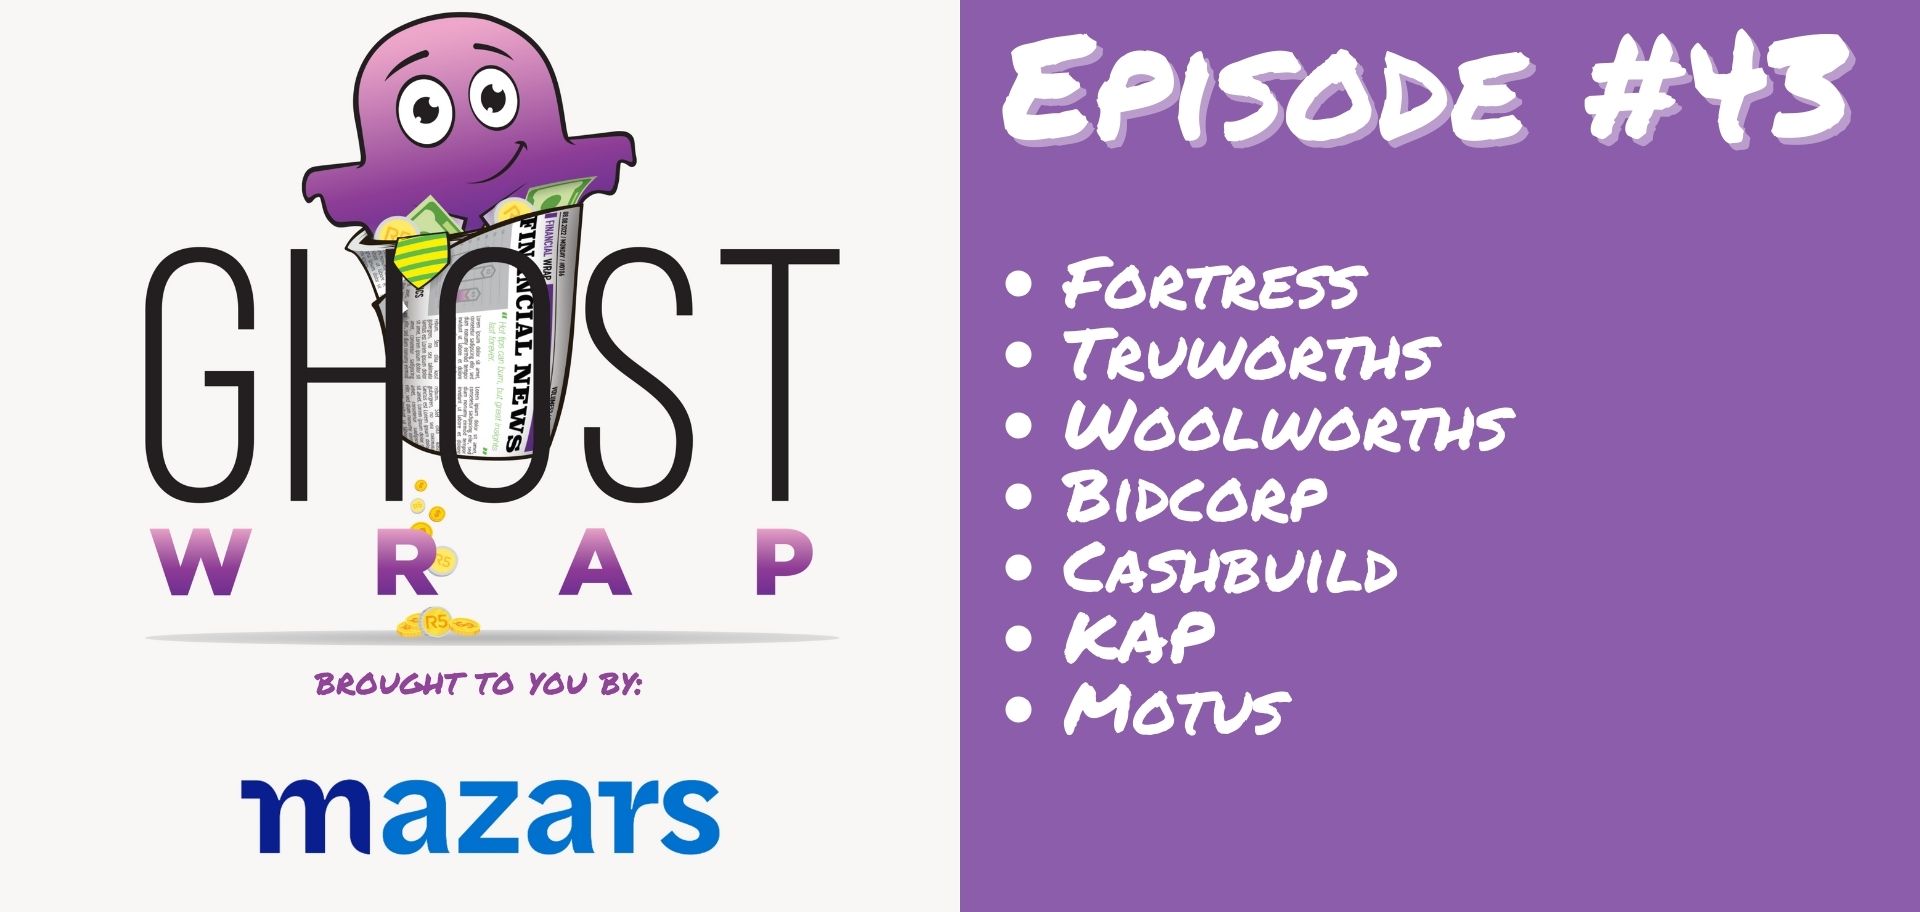 Ghost Wrap #43 (Fortress | Truworths | Woolworths | Bidcorp | Cashbuild | KAP | Motus)